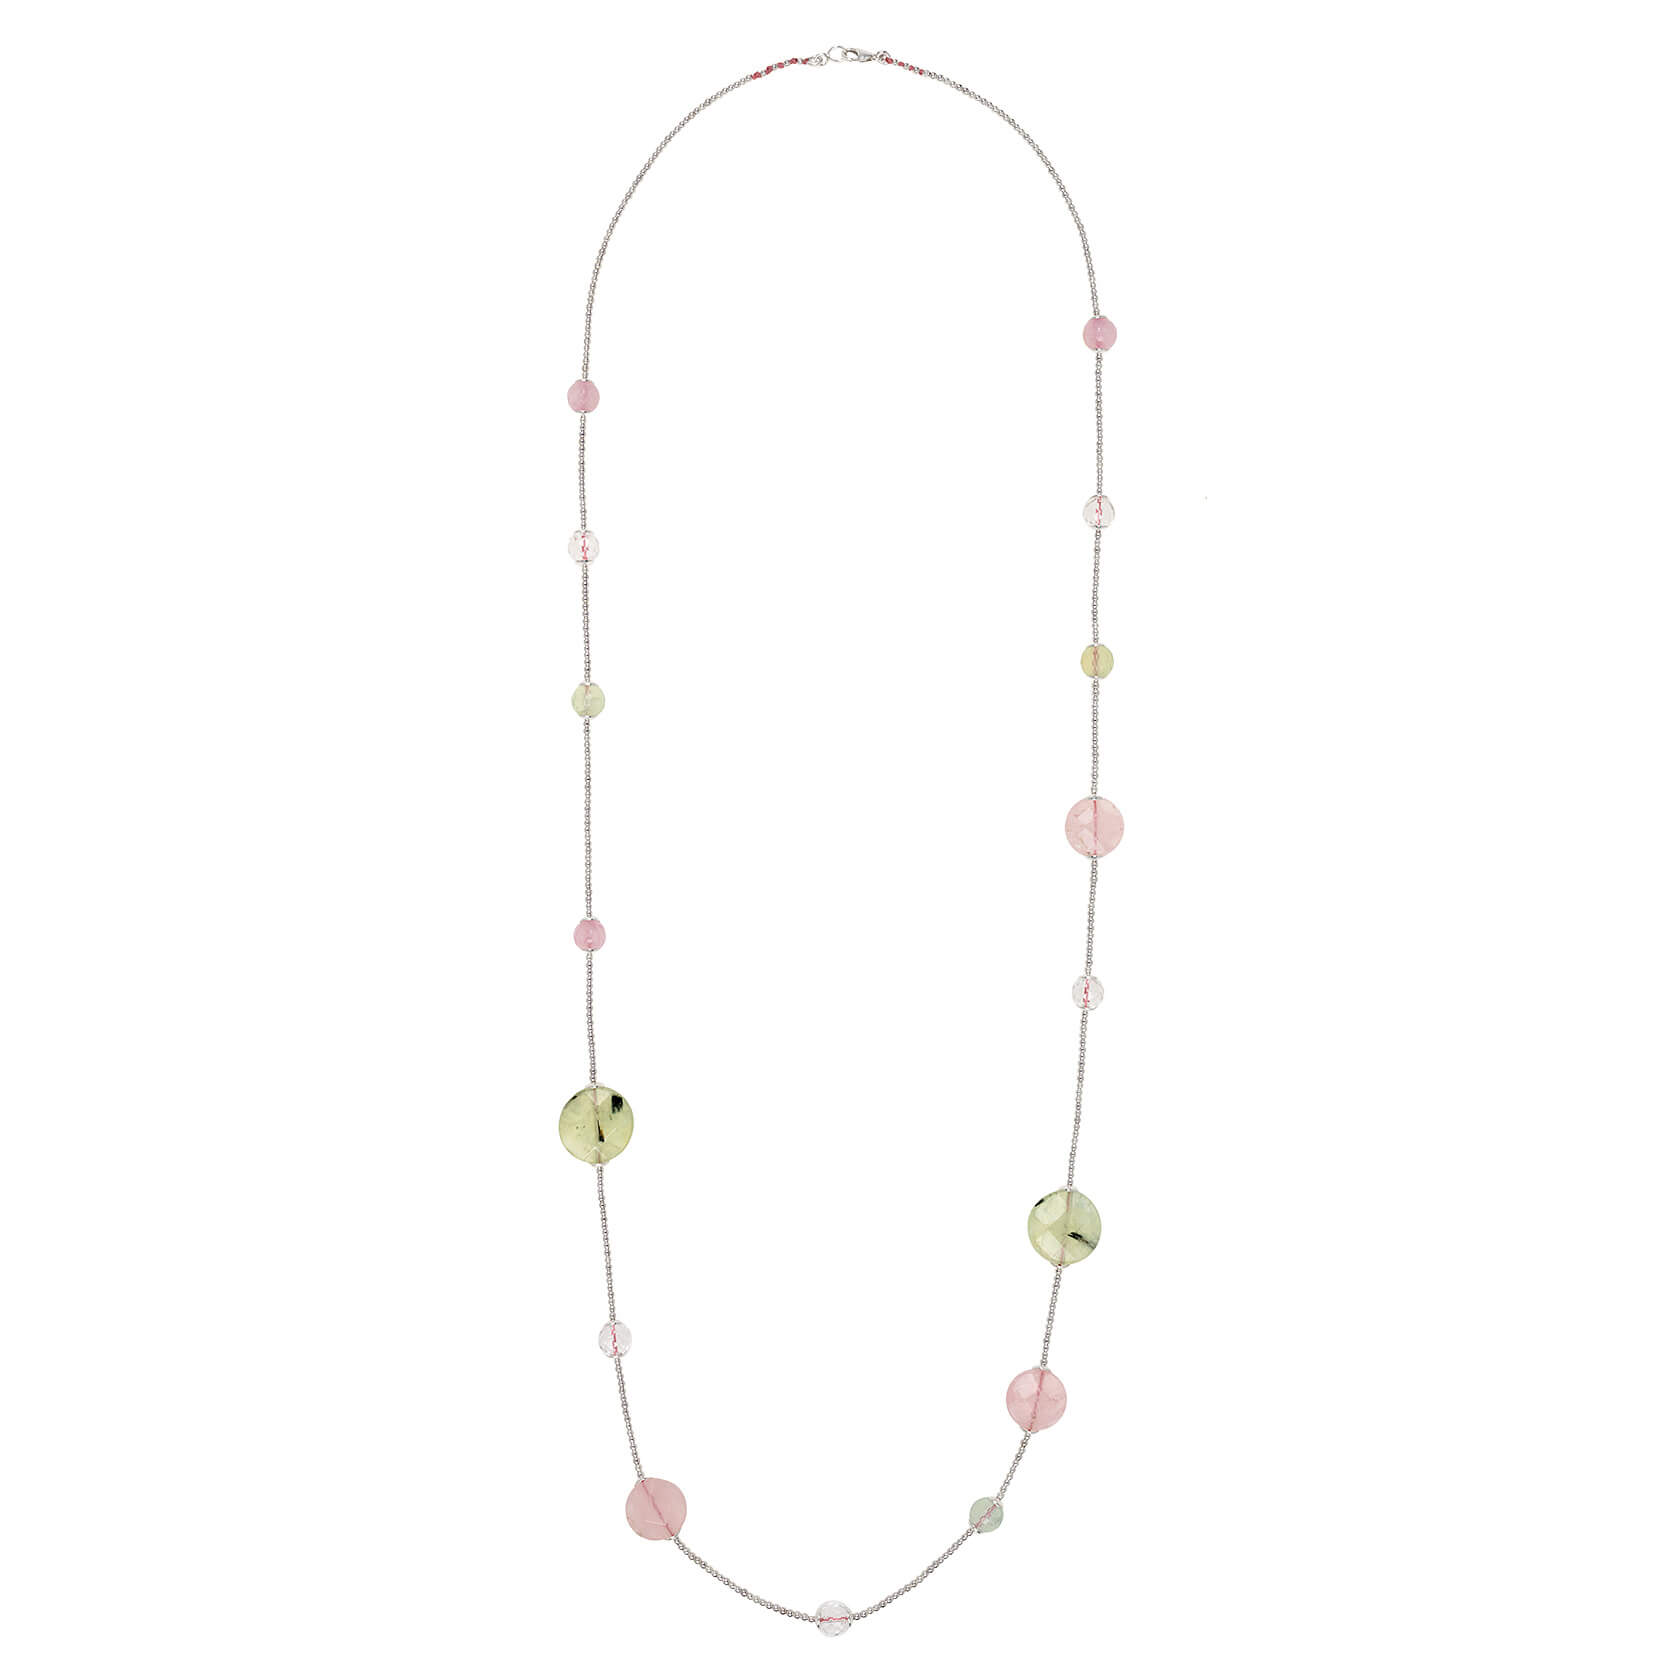 Rose quartz and silver necklace